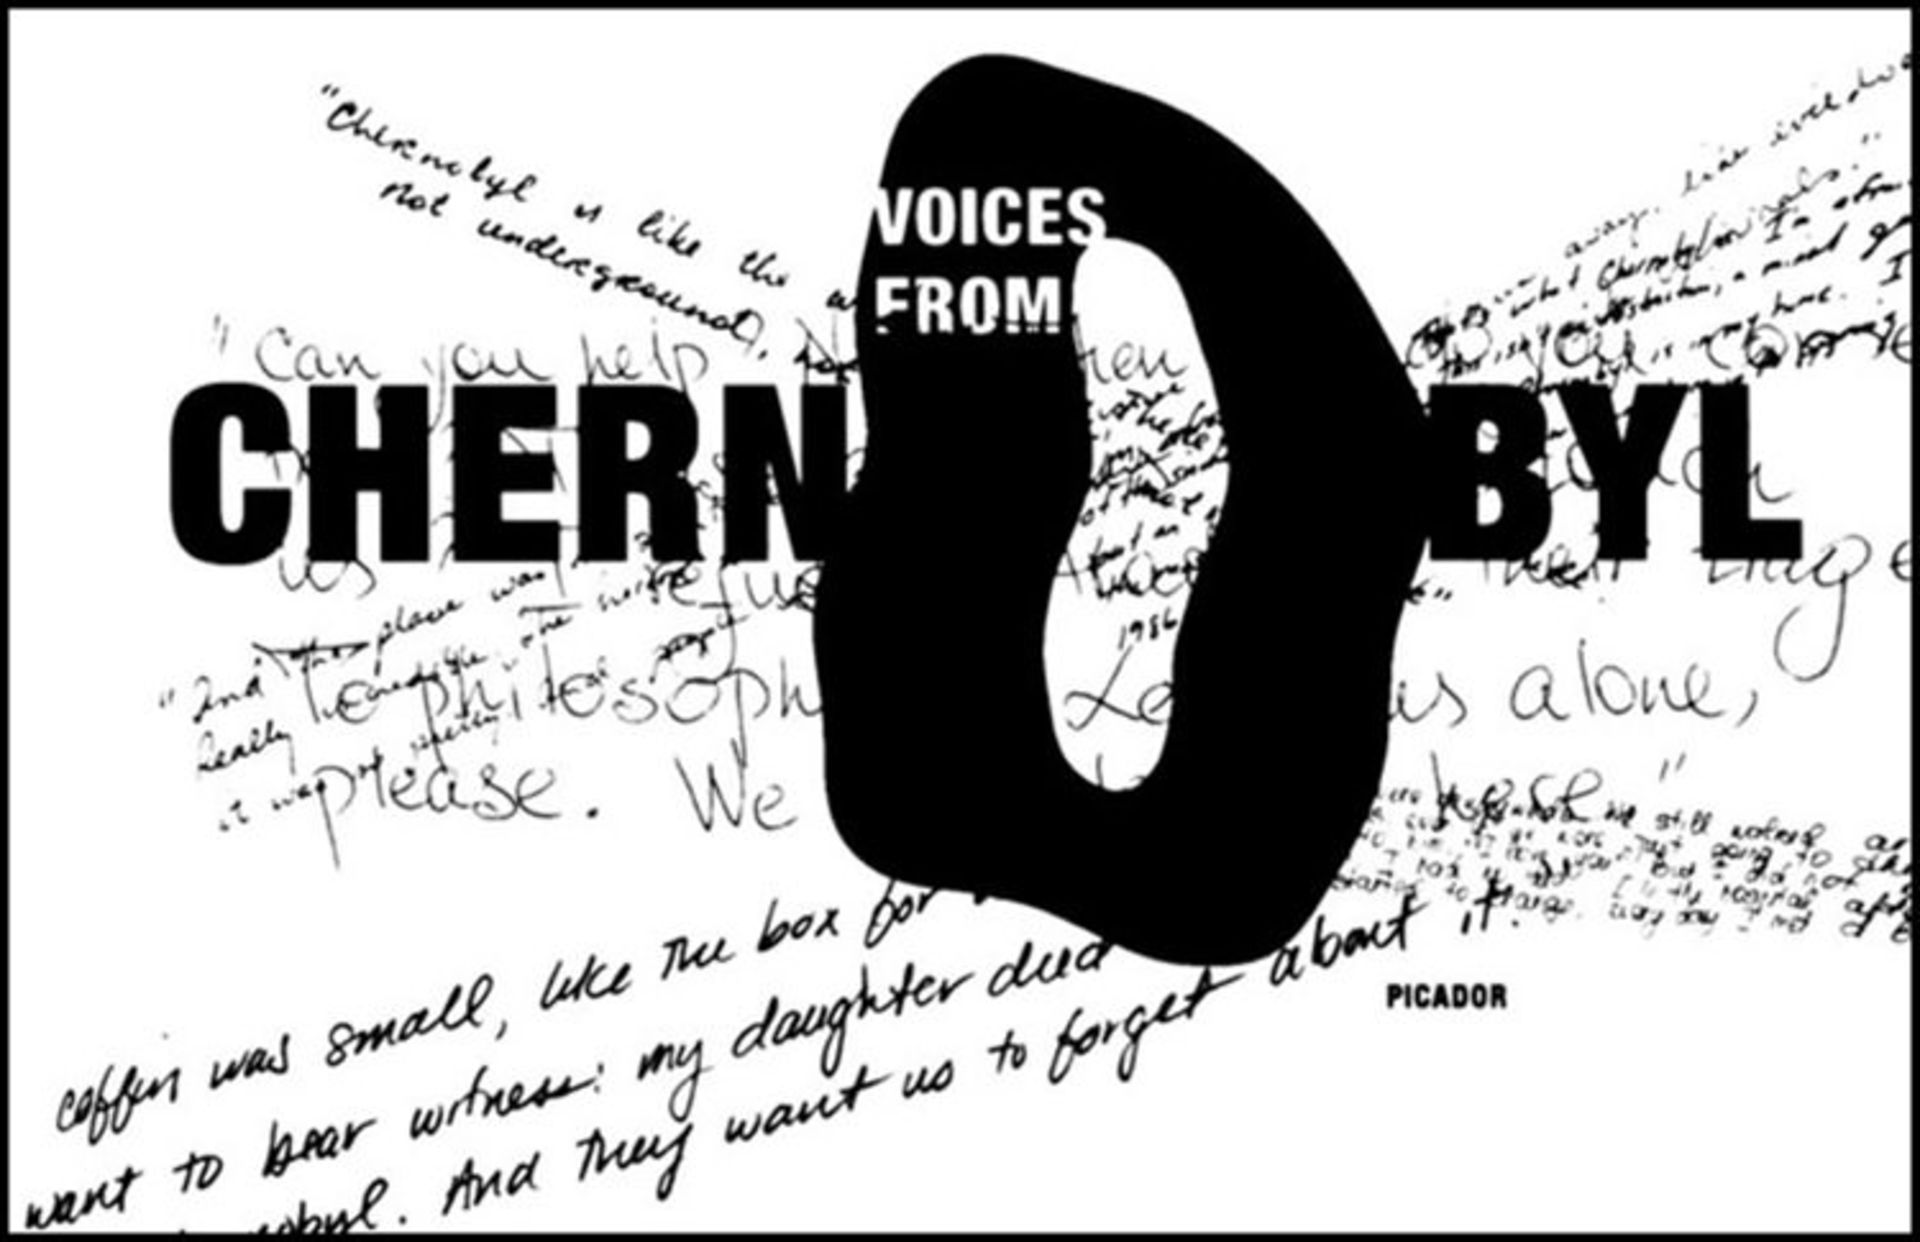 voices from chernobyl book/صداهایی از چرنوبیل کتاب